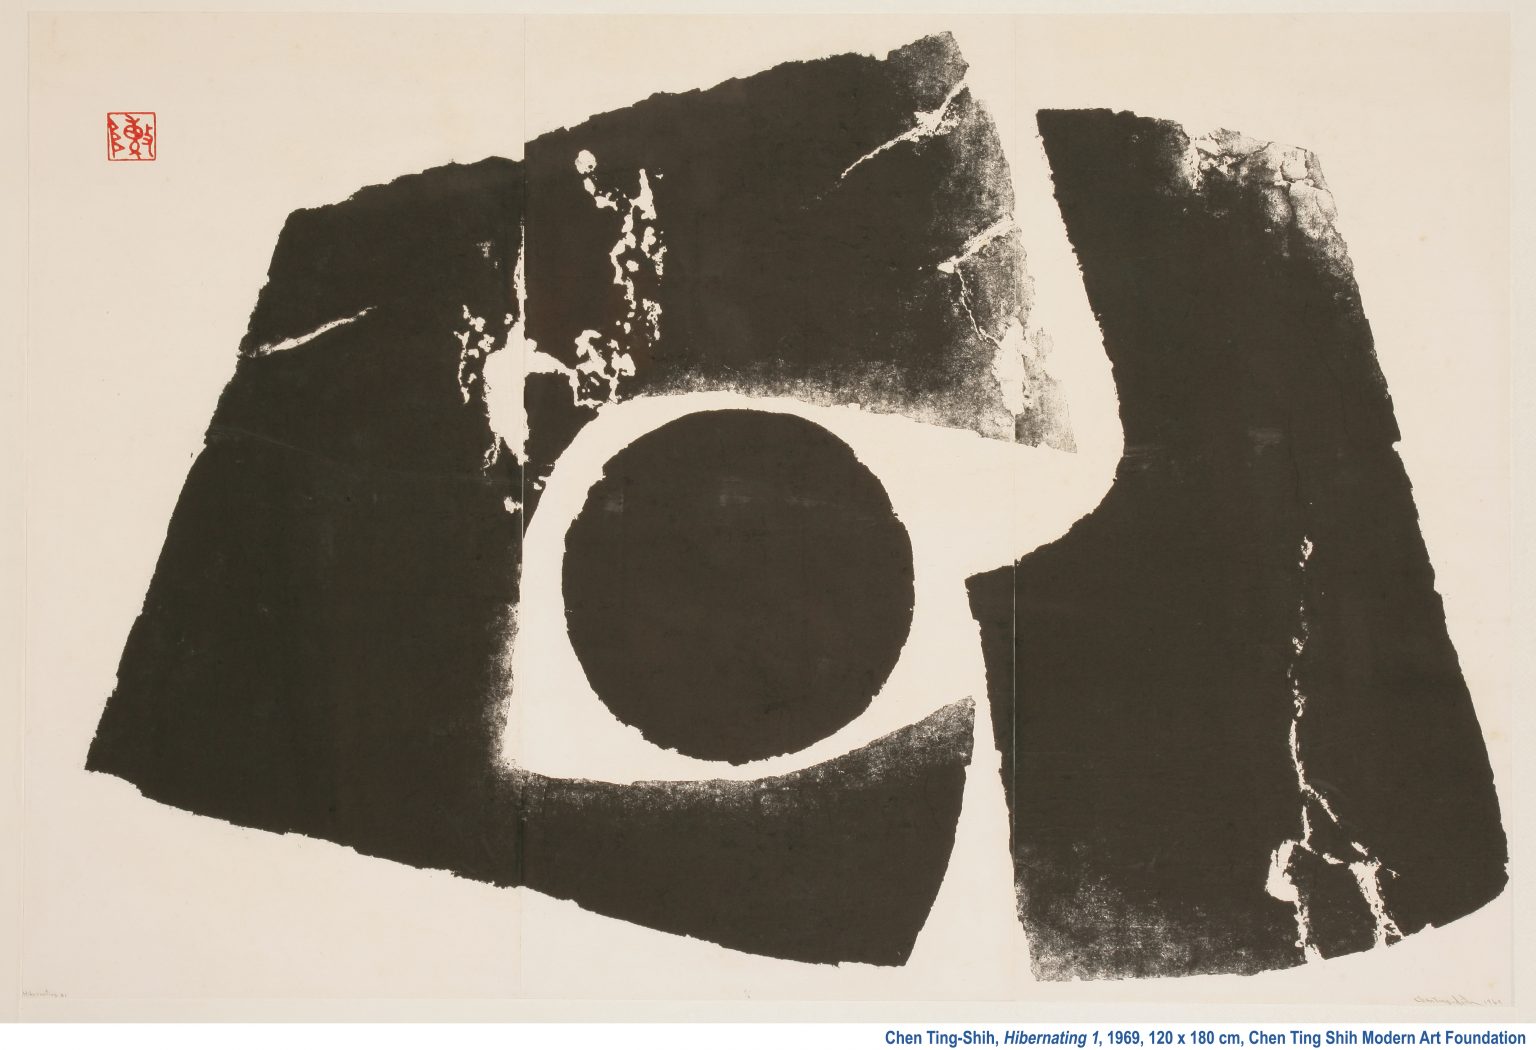 Chen Ting Shih, "Hibernating 1," 1969, Chen Ting Shih Modern Art Foundation